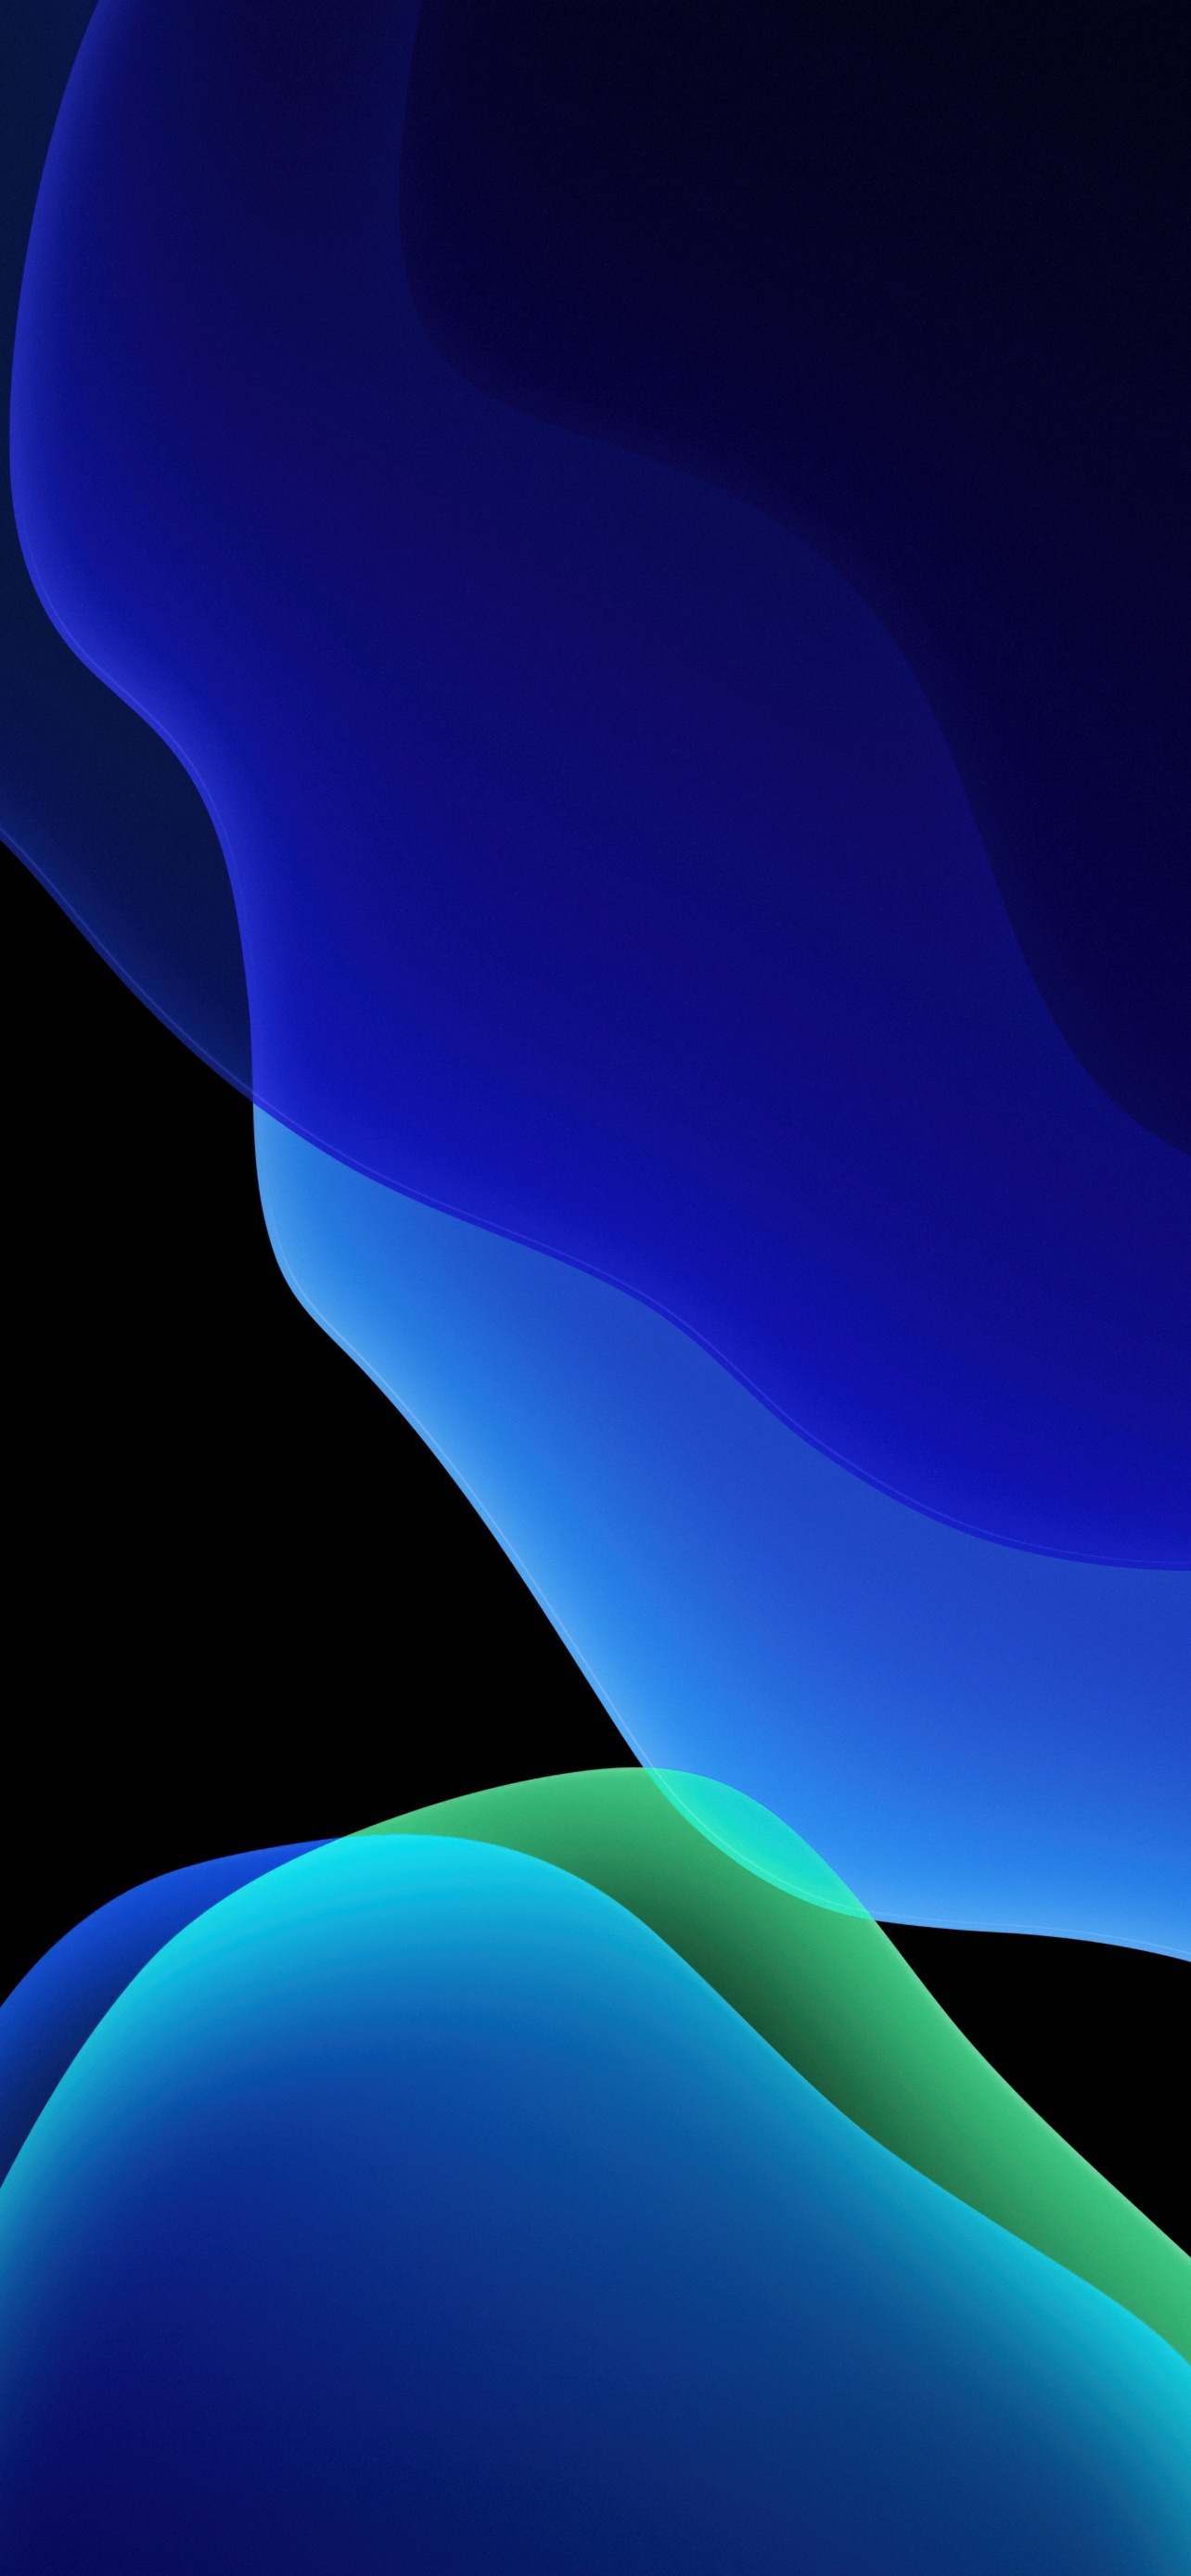 Blue iOS 13 redo by AR72014 on Twitter  New wallpaper iphone Samsung  wallpaper Original iphone wallpaper